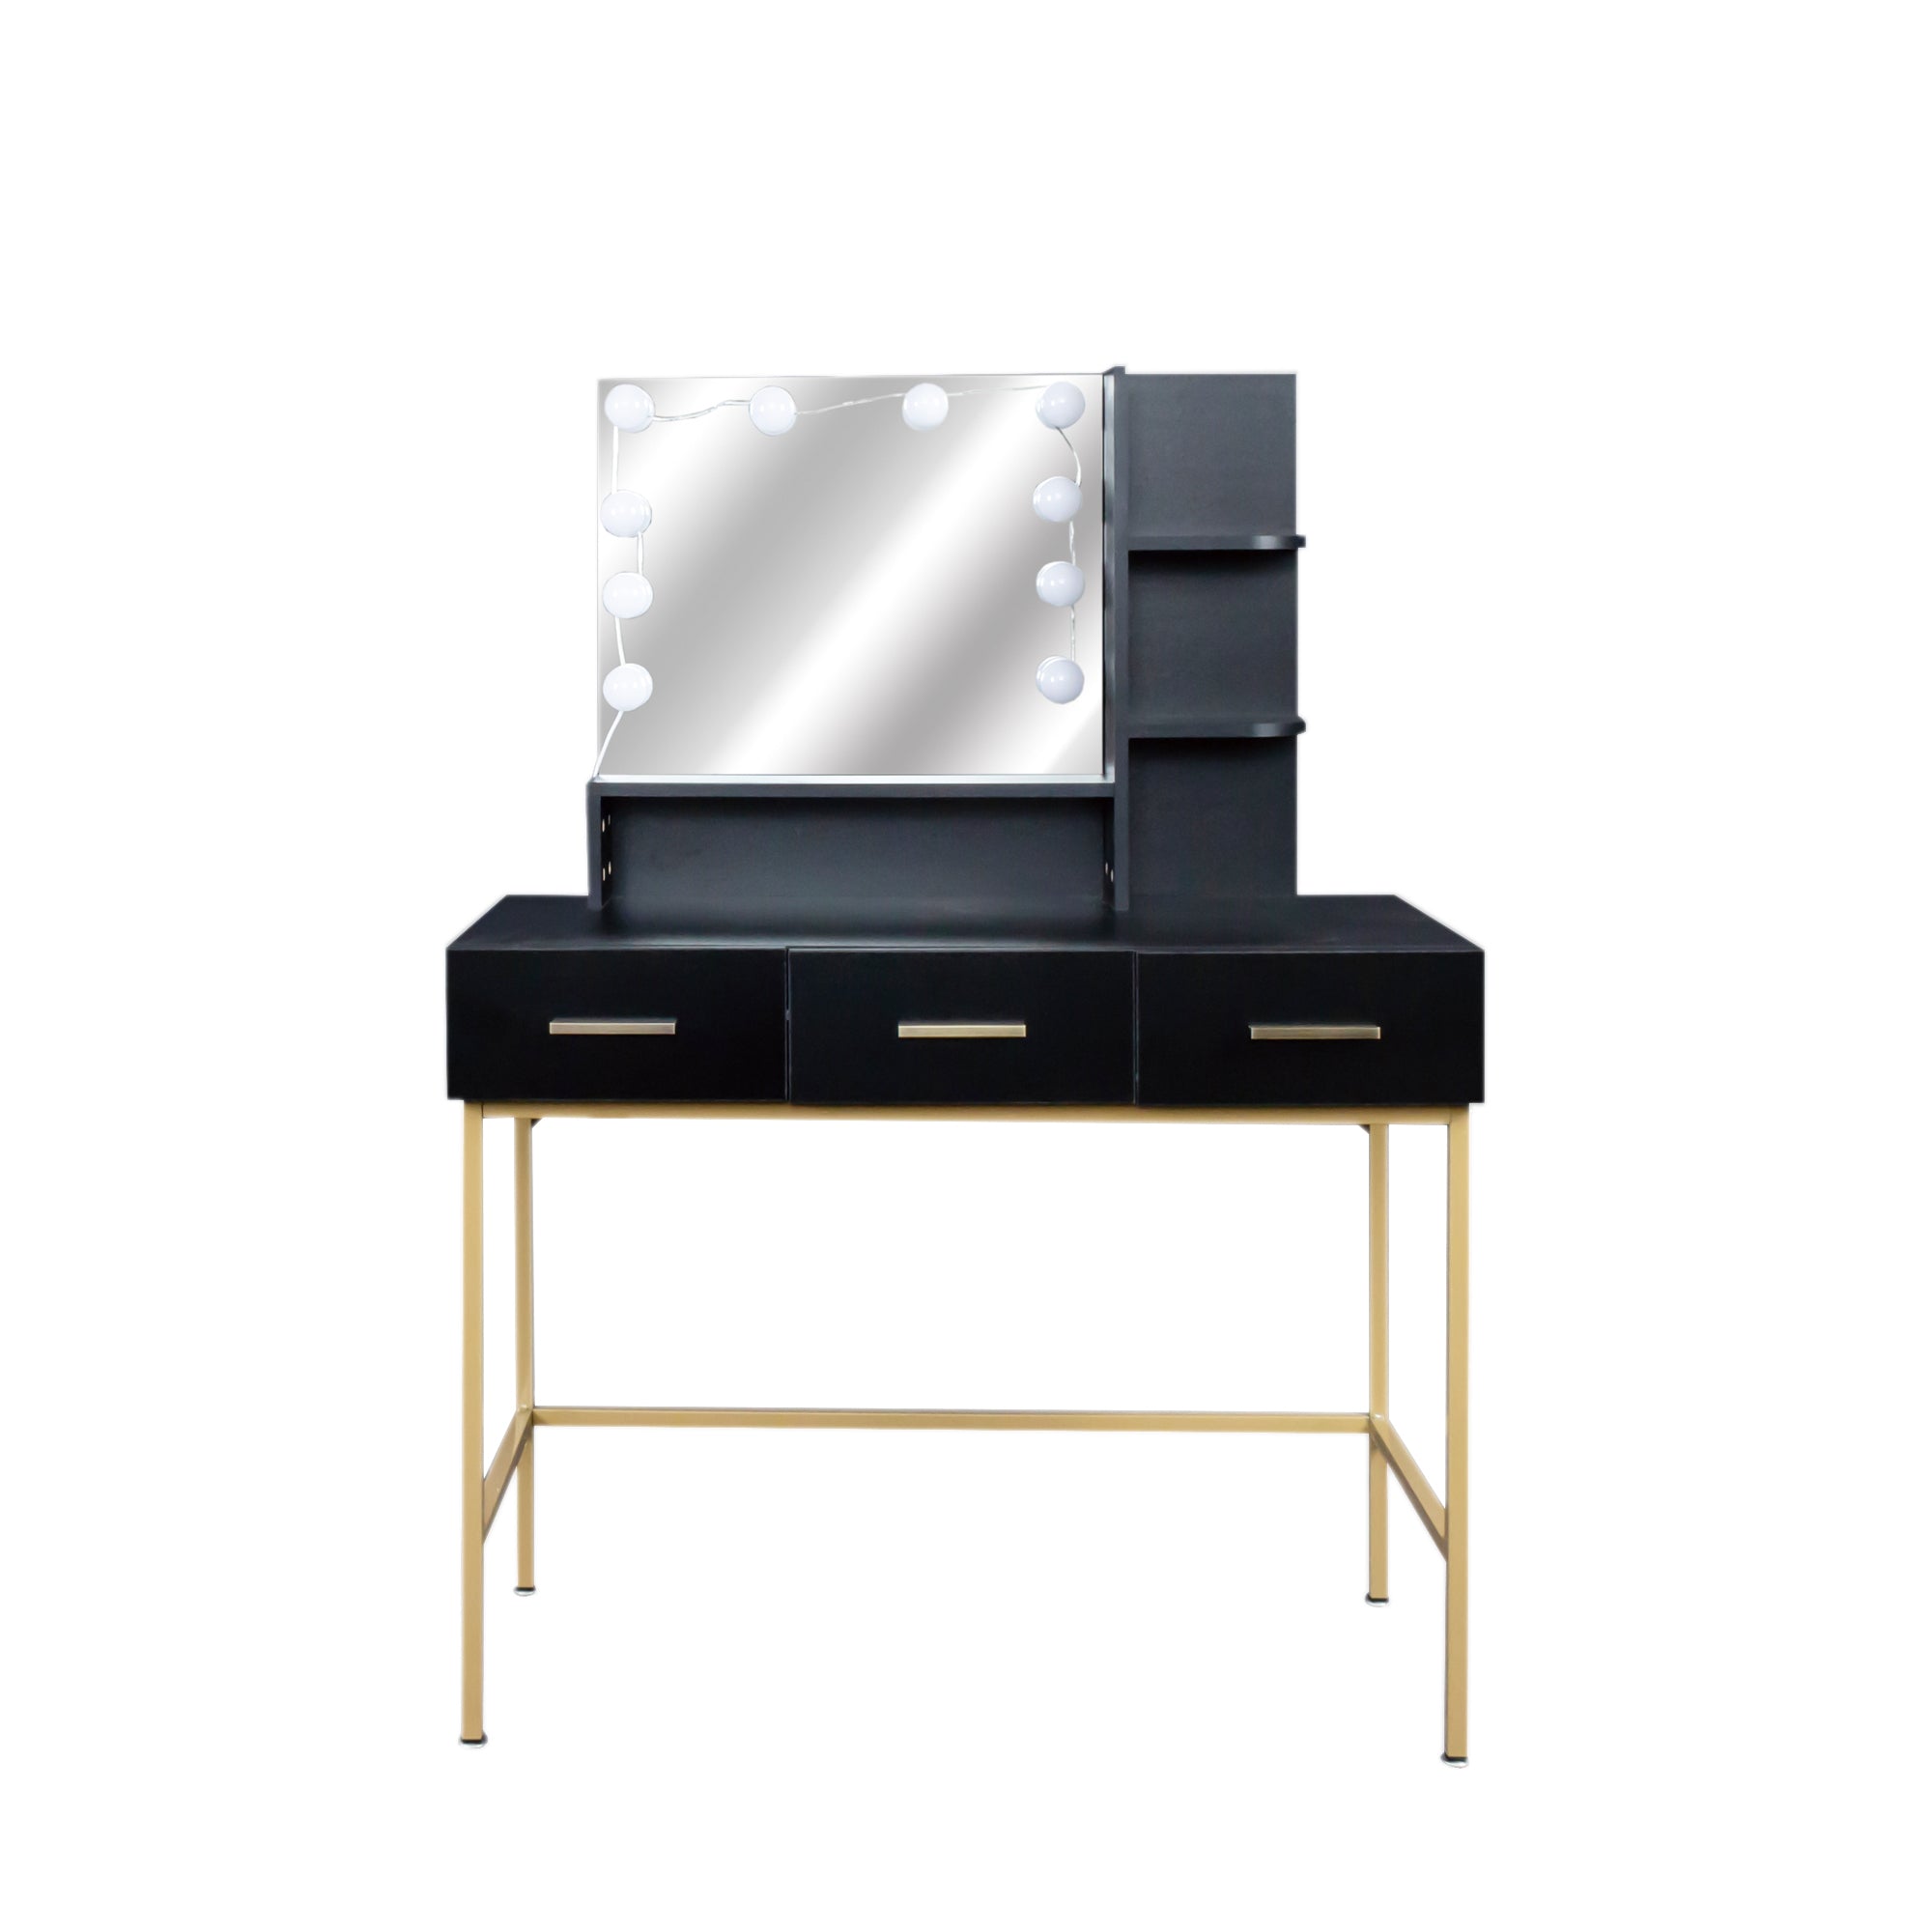 39.37" Black modern minimalist makeup vanity with Seating Stool and LED Lights Mirror